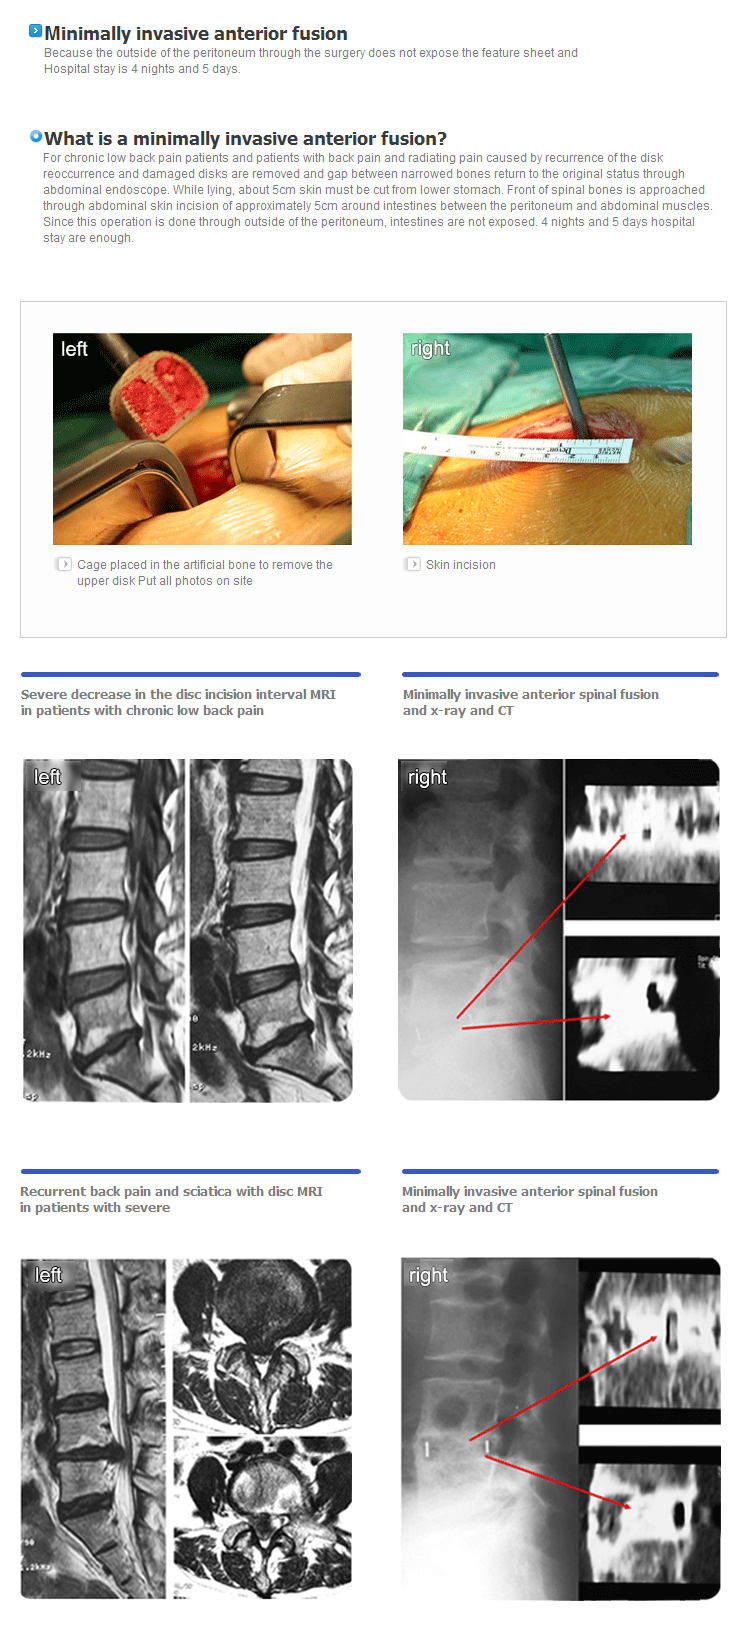 Minimally invasive anterior spinal fusion